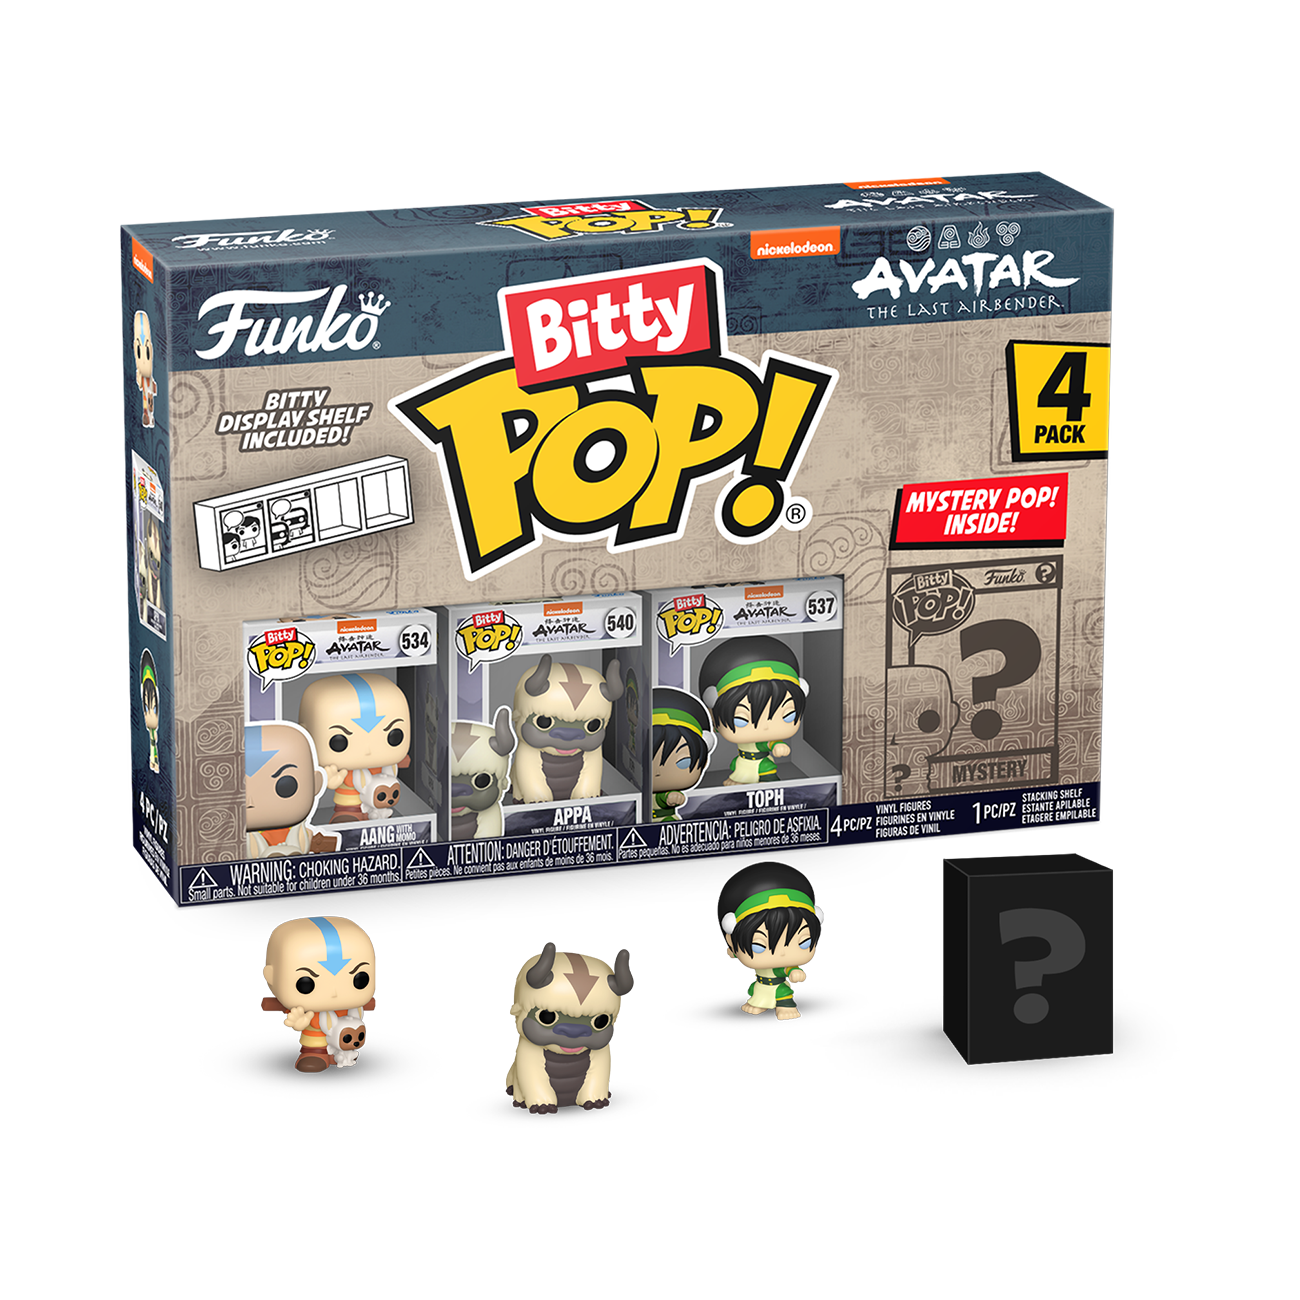 Funko Bitty POP! Avatar: The Last Airbender Vinyl Figure Set 4-Pack (Aang, Appa, Toph and Mystery Pop!)